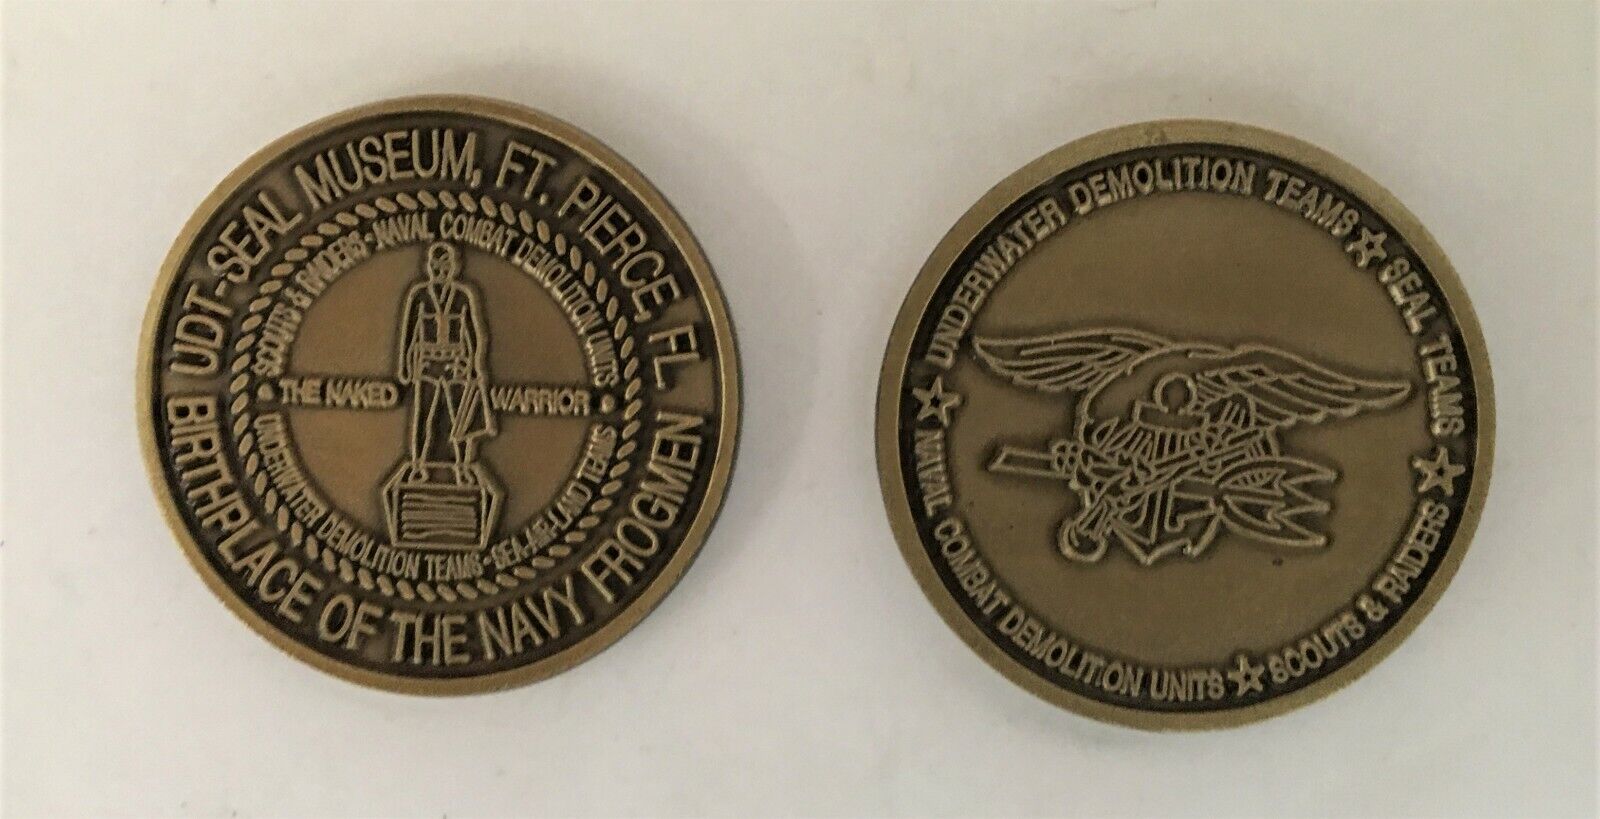 UDT SEAL Museum Vintage Challenge Coin SEAL Team VI  Dev Gru Fort Pierce Frogman